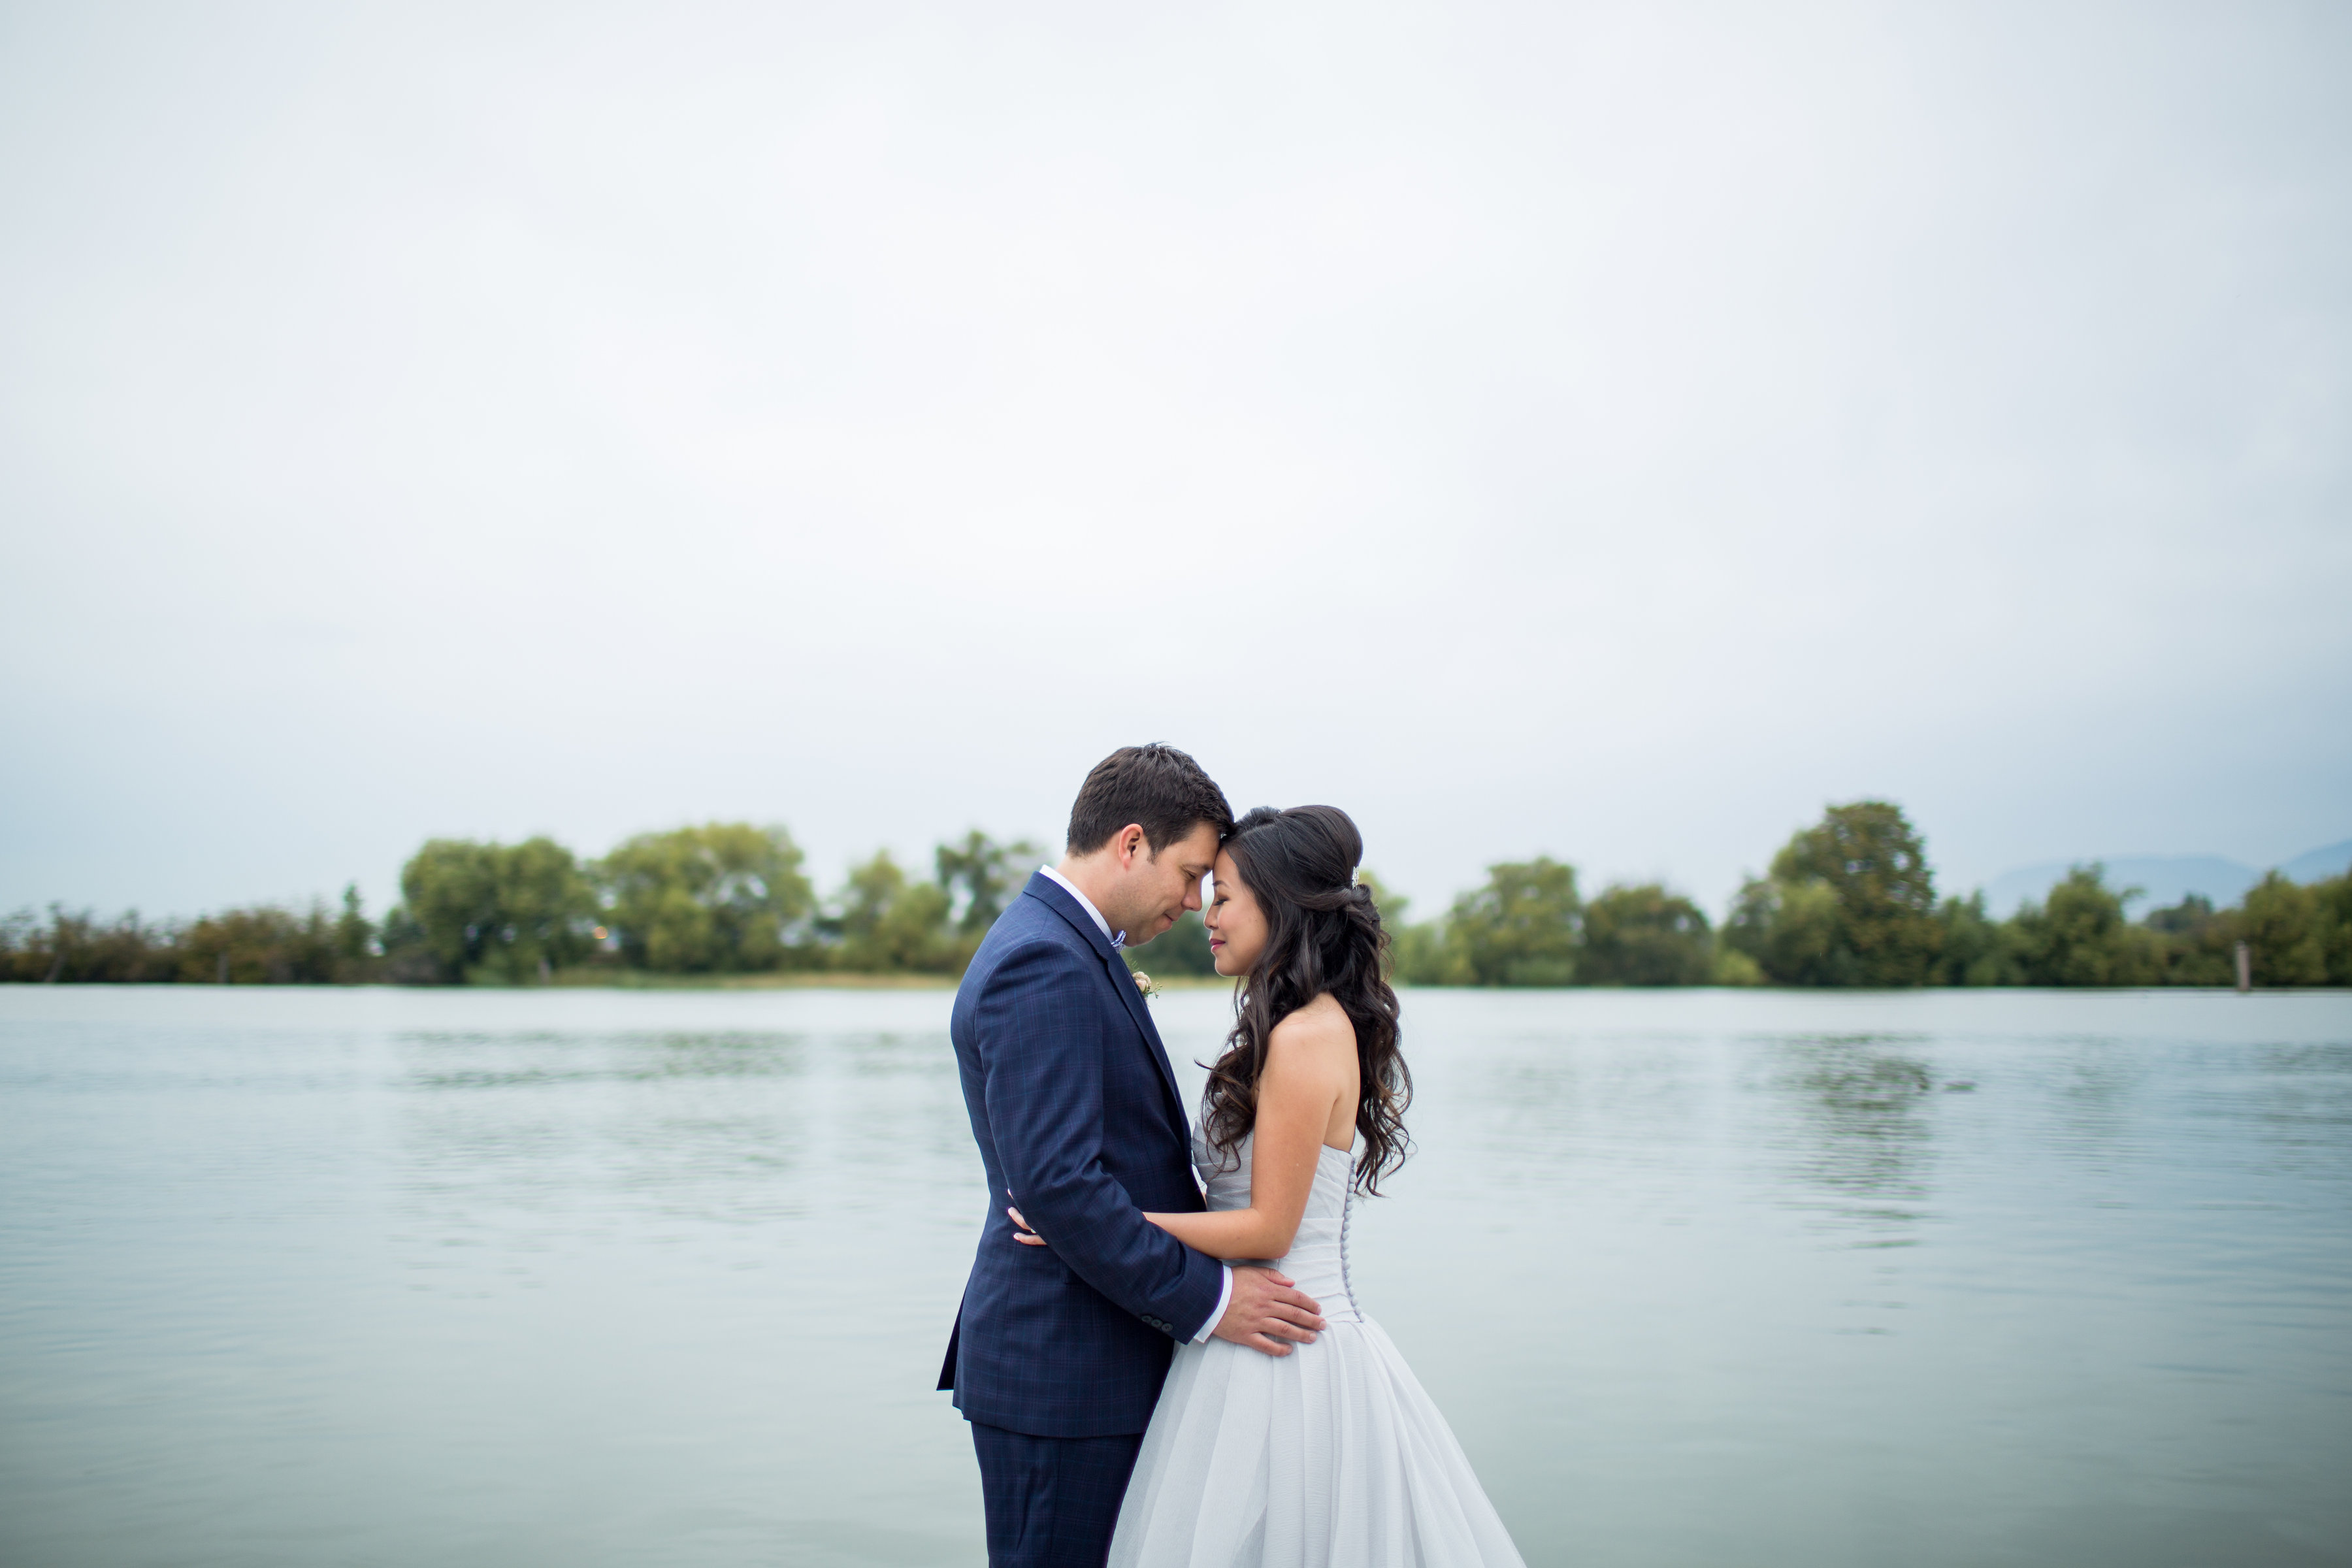 Vancouver Wedding Video & Photo | Premier Love